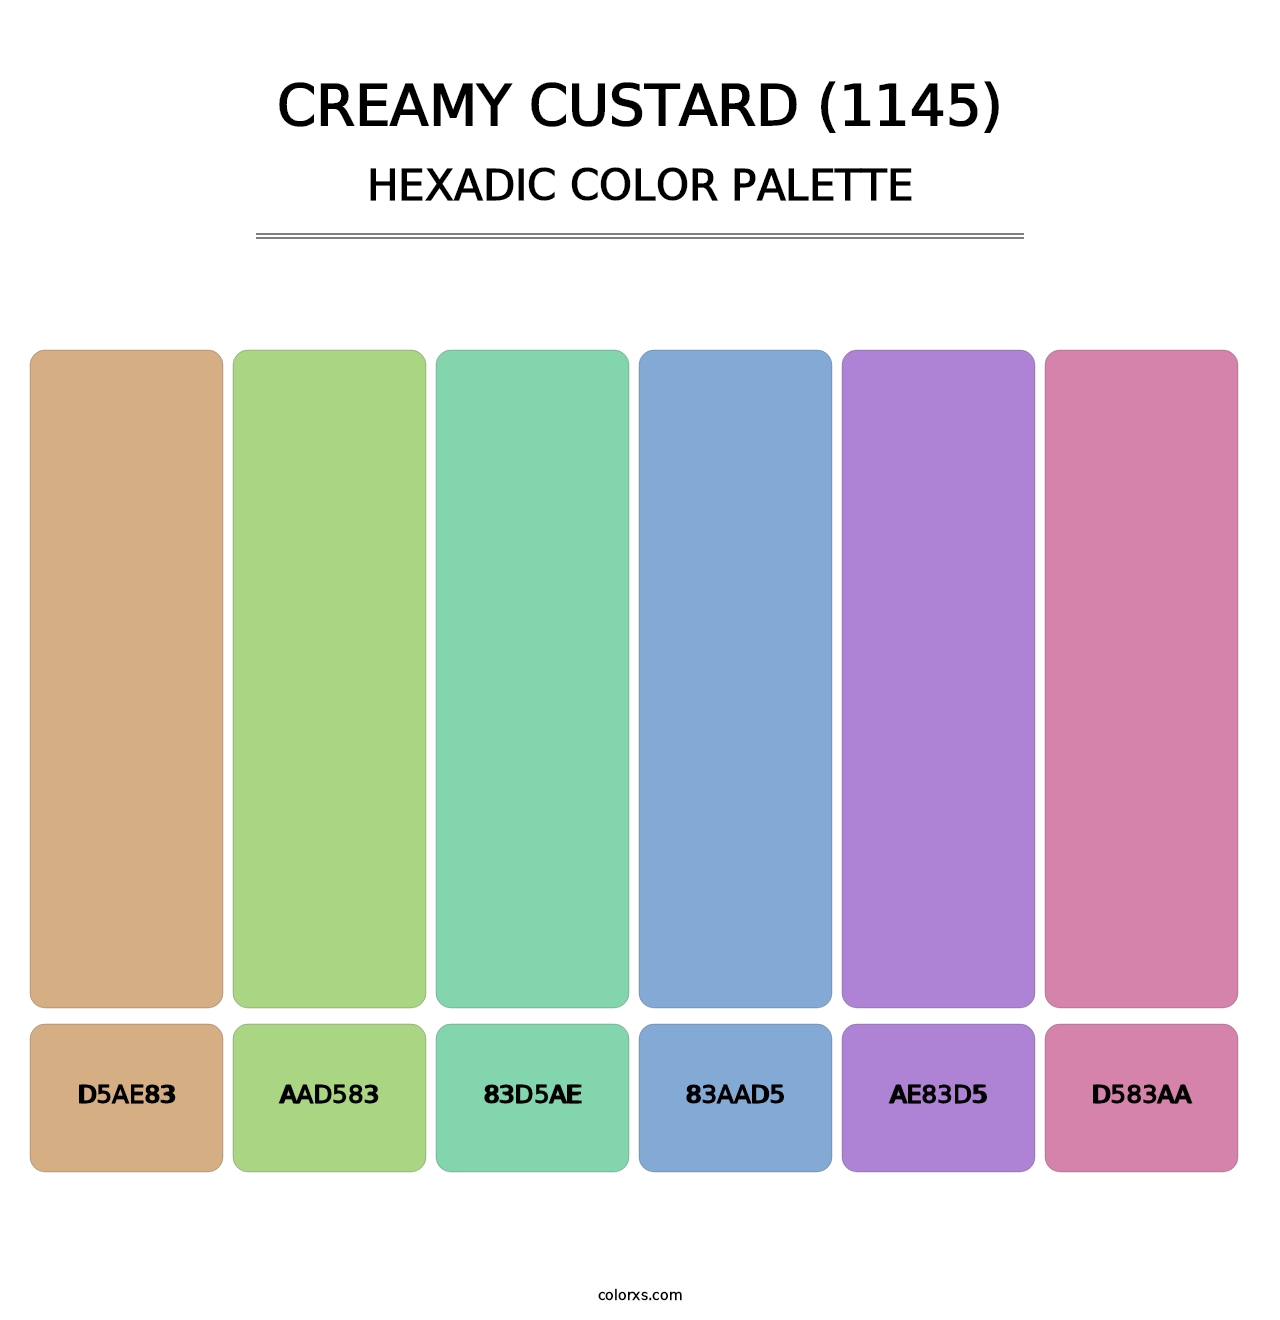 Creamy Custard (1145) - Hexadic Color Palette